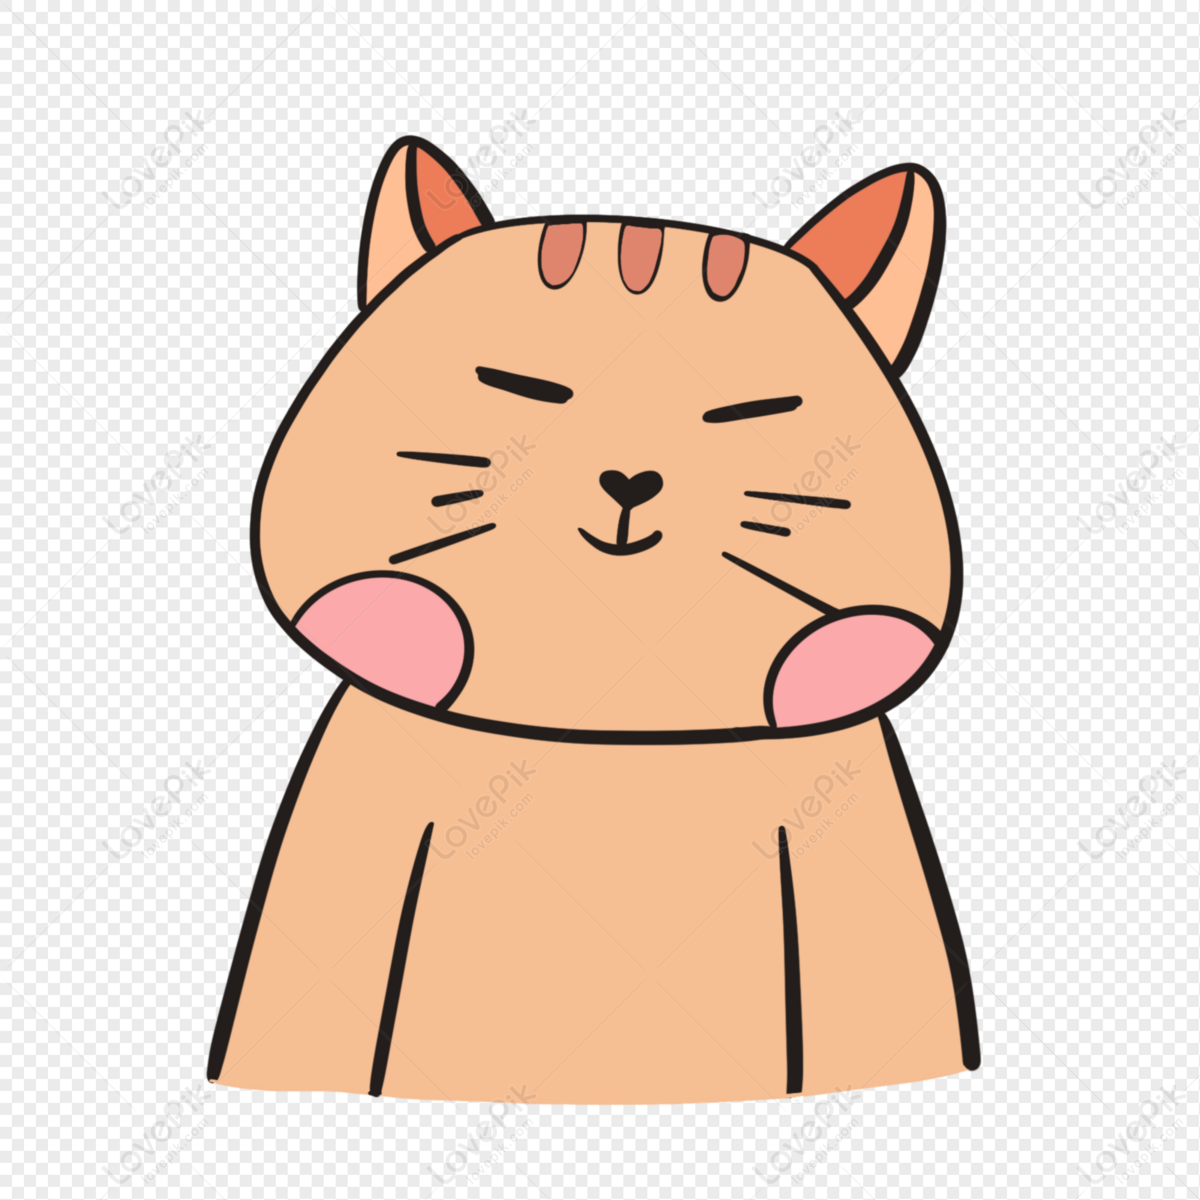 कार्टून गुलाबी बिल्ली का बच्चा मुस्कान चित्रण चित्र  डाउनलोड_ग्राफिक्सPRFचित्र आईडी401267111_PSDचित्र  प्रारूपमुफ्त की तस्वीर